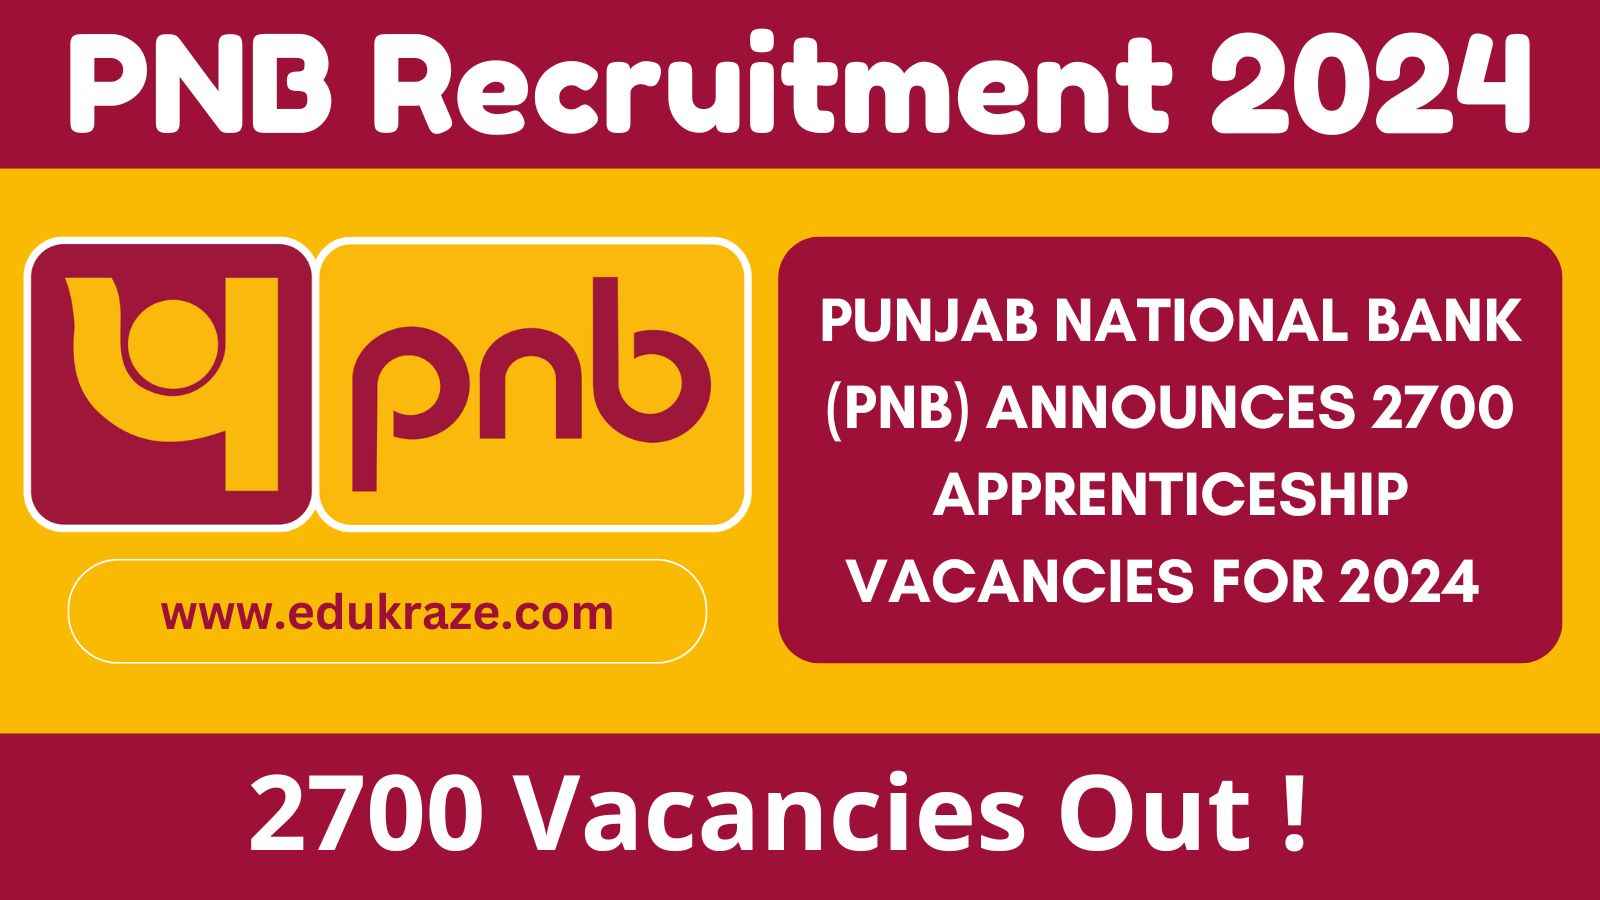 Punjab National Bank Recruitment Announced for 2700 Vacancies Across India